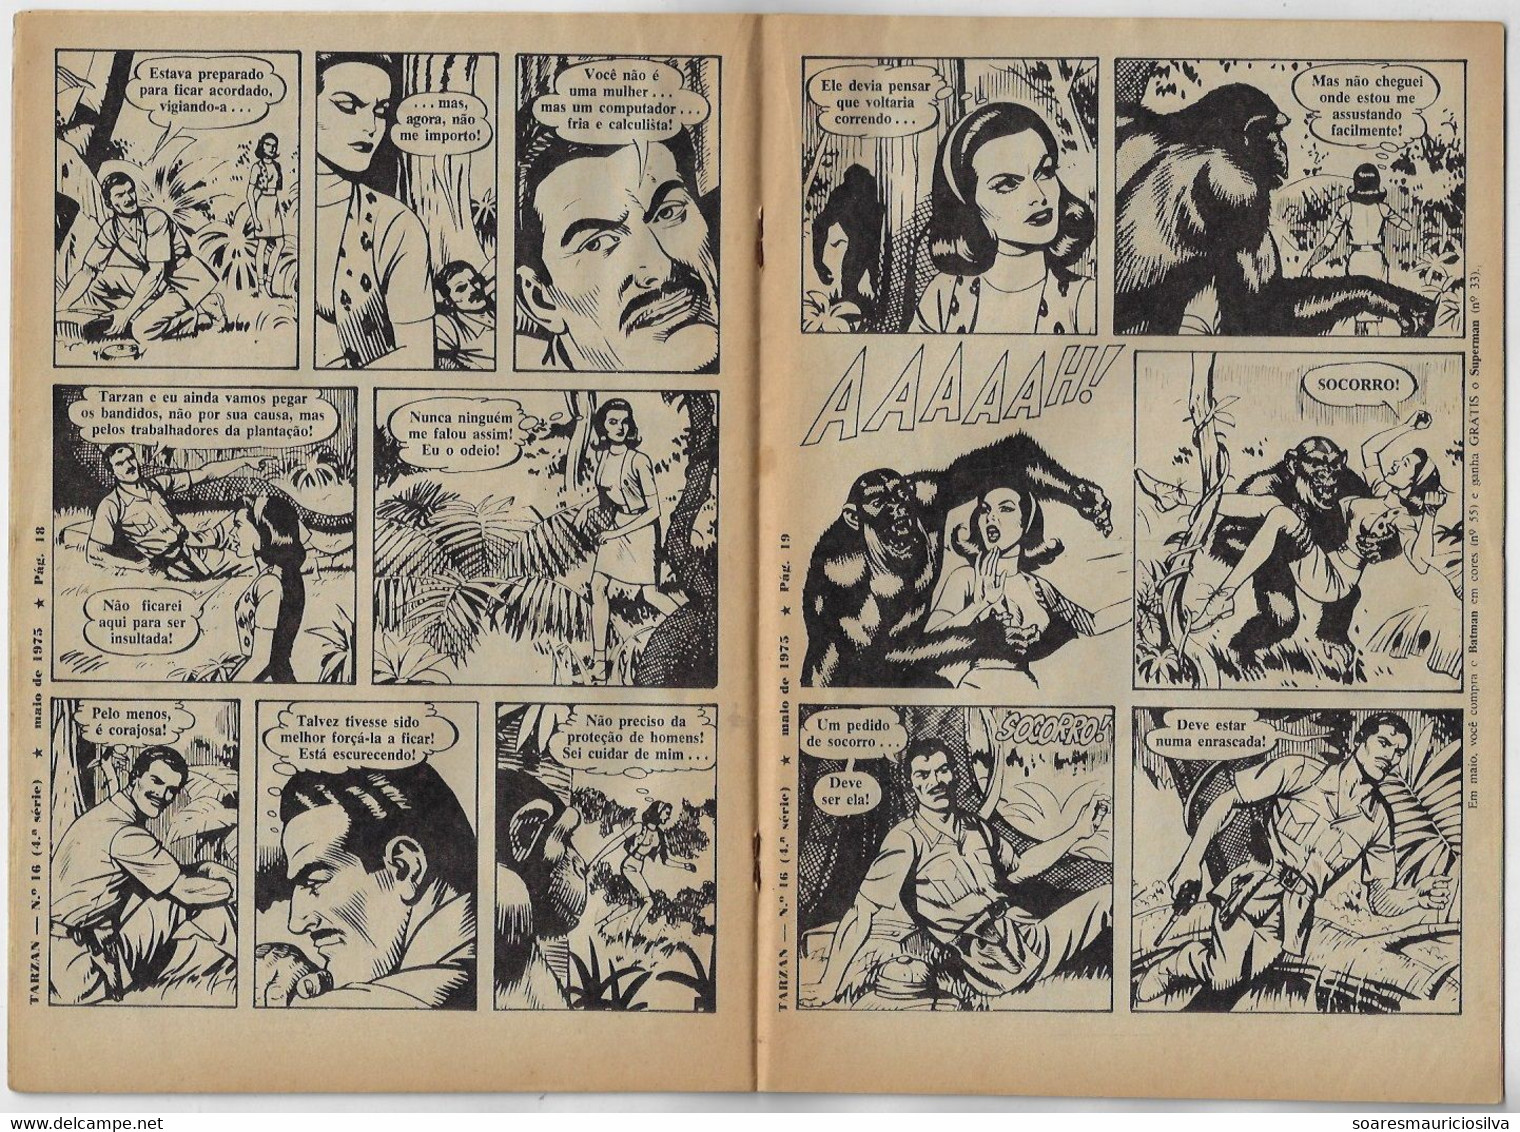 Brazil 1975 Magazine Comic Tarzan Nº 16 4th Series Publisher Ebal 36 Pages In Portuguese Size 18x26cm - Comics & Manga (andere Sprachen)